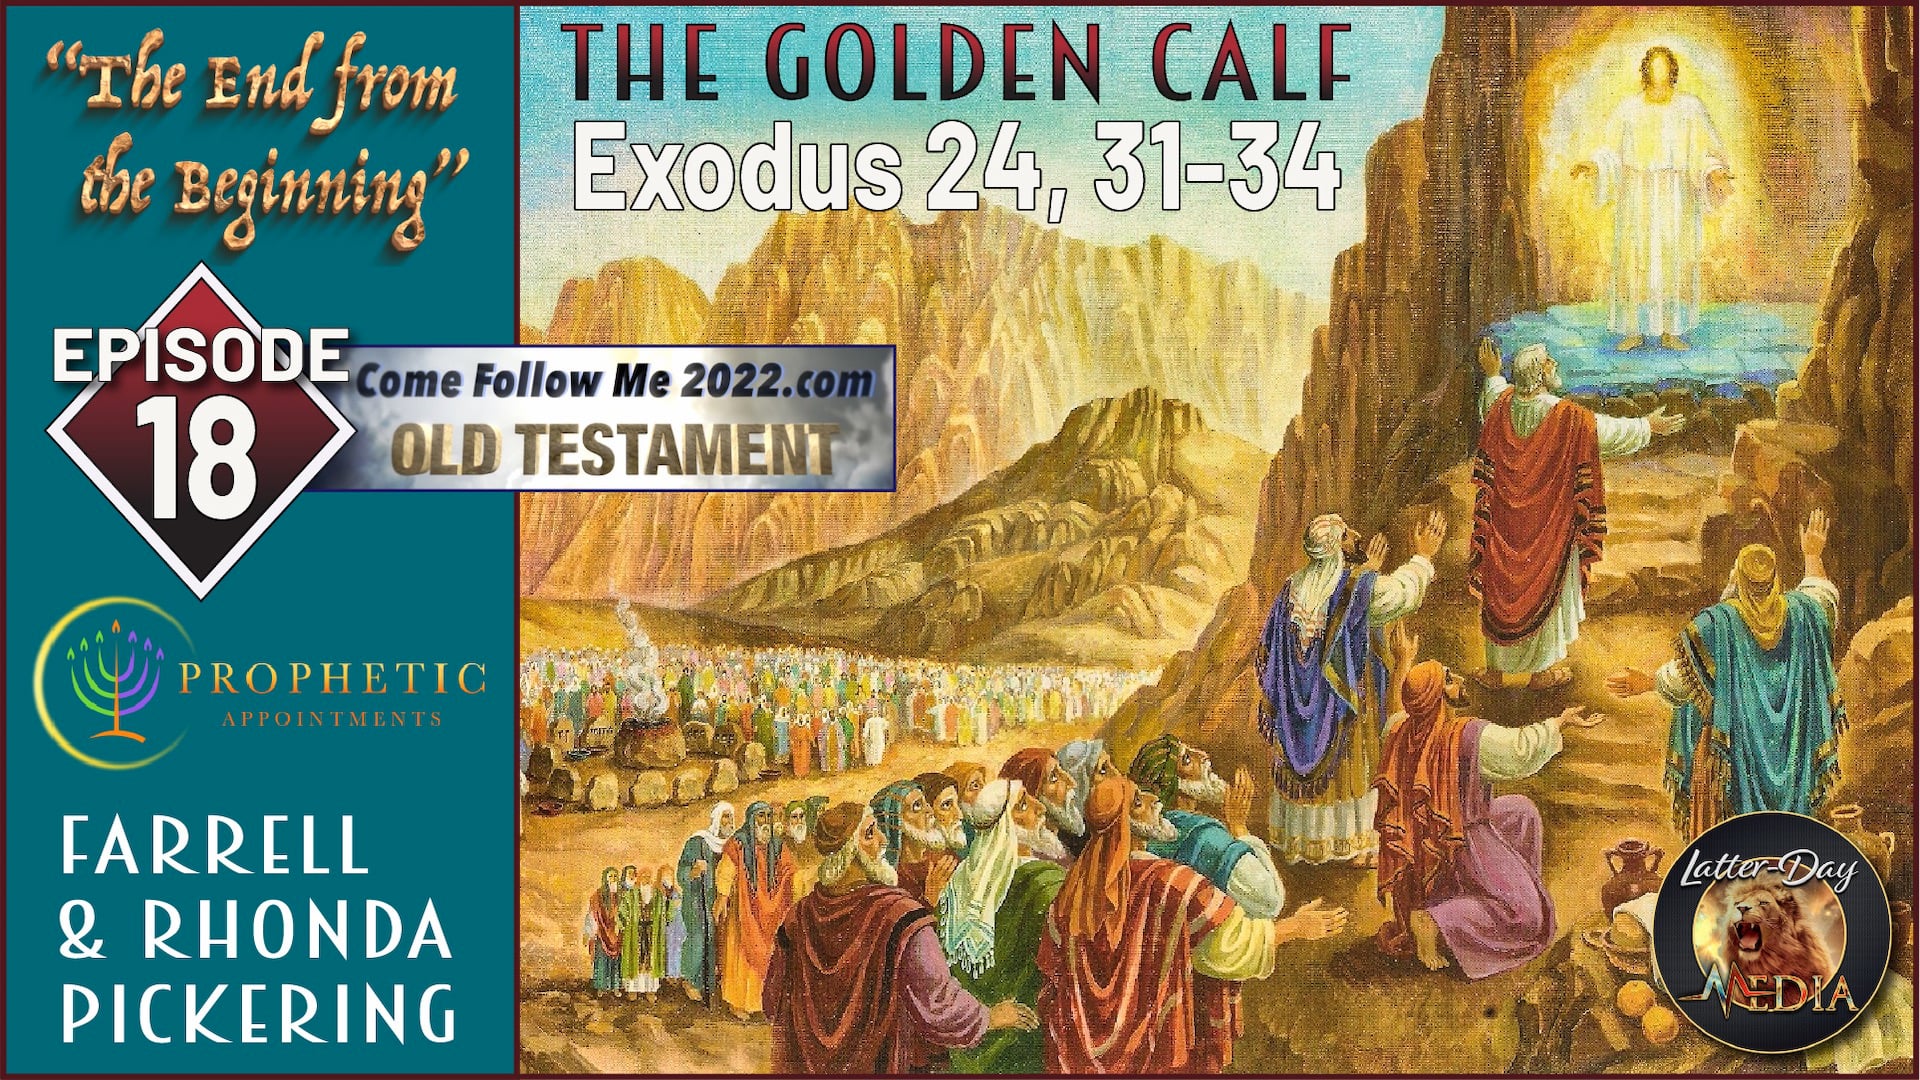 EP 18 The Golden Calf - Exodus 24, 31-34 Rhonda & Farrell Pickering Come Follow Me 2022